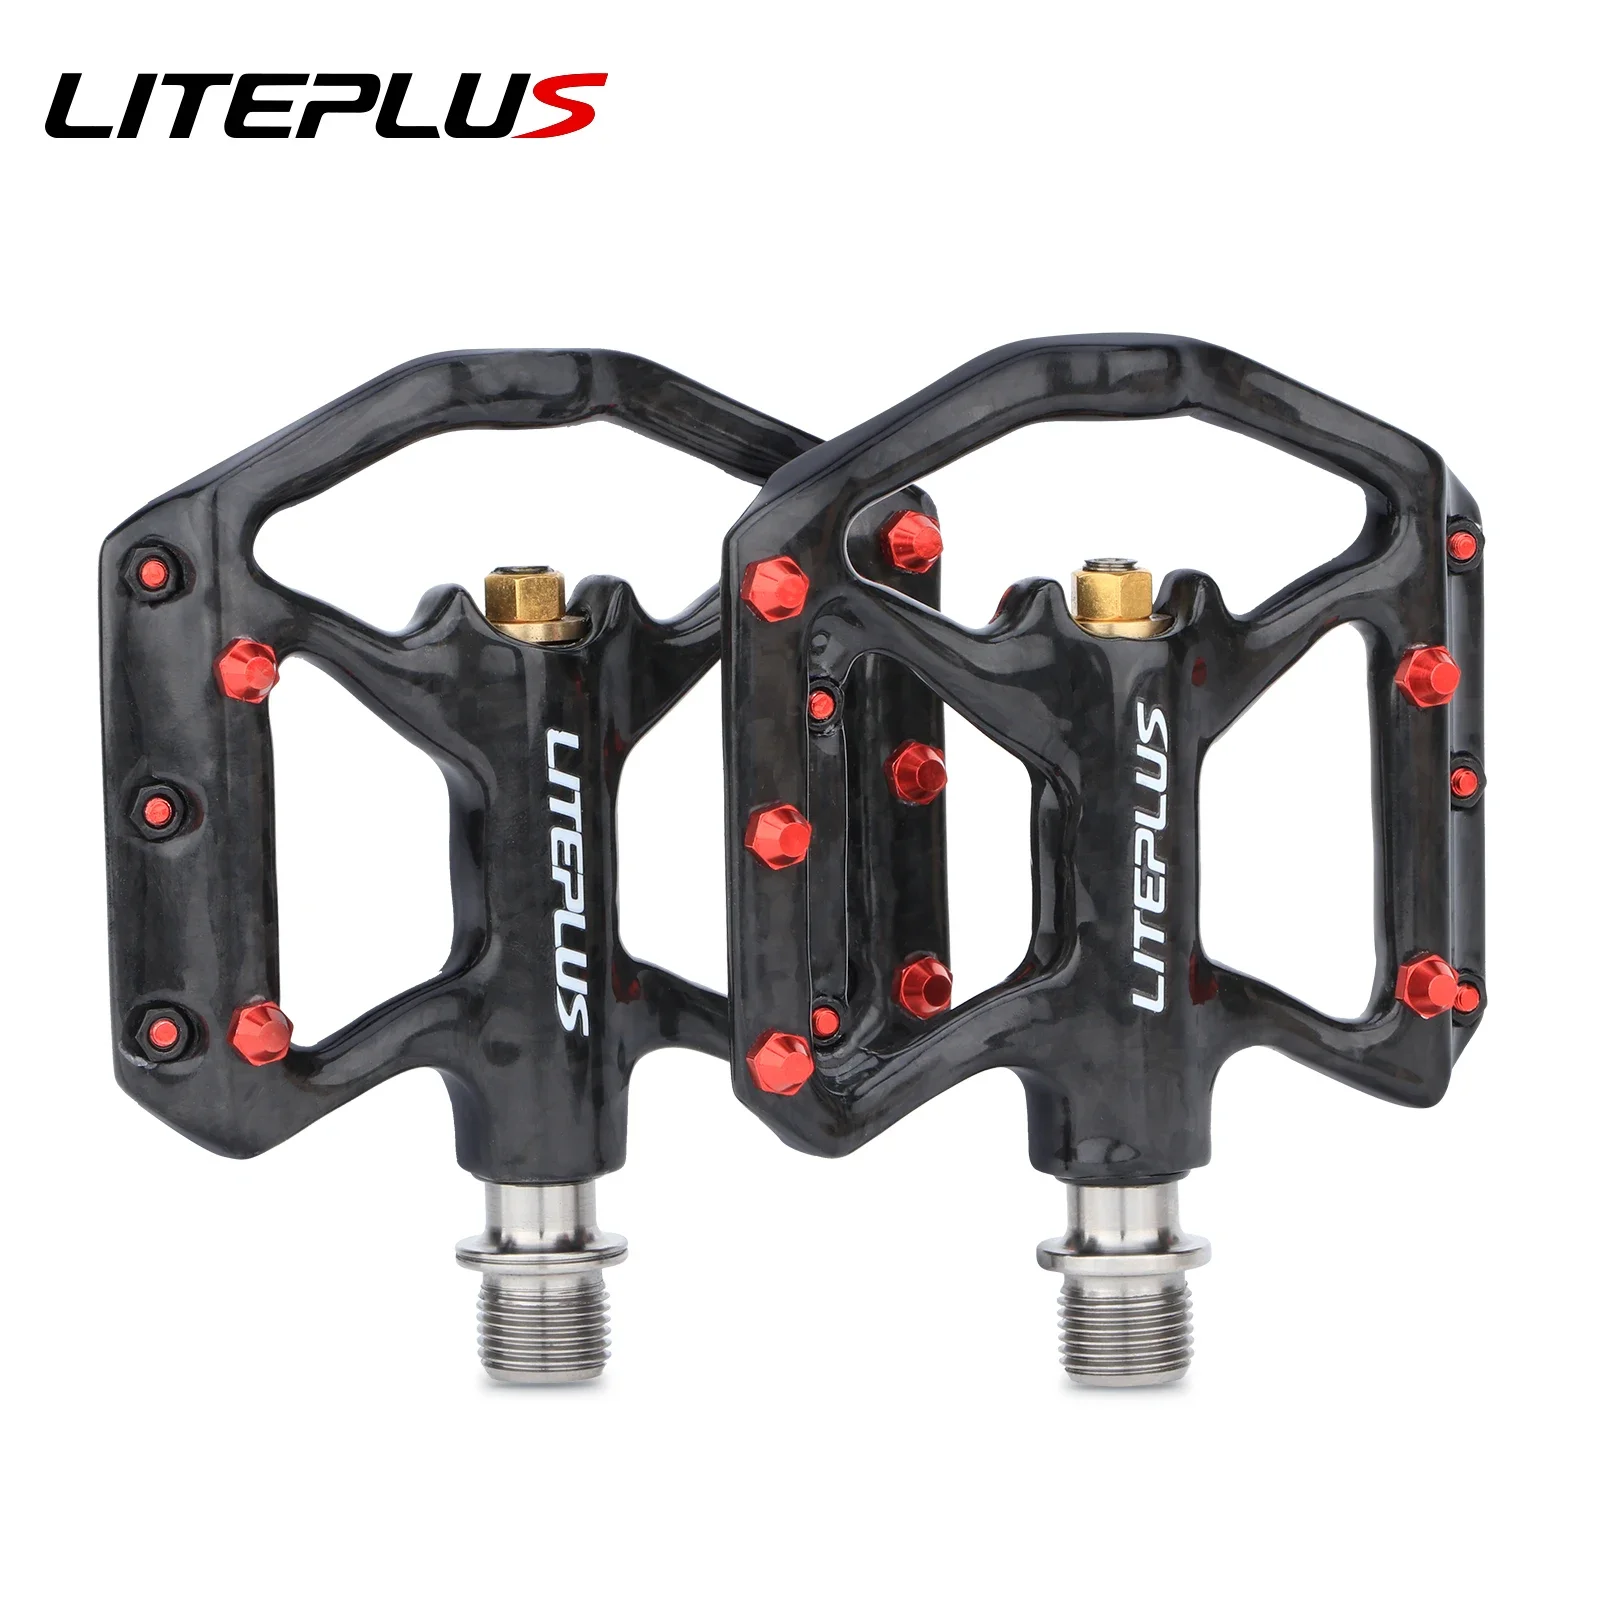 

Liteplus Ultralight Carbon Fiber Pedal Titanium Sealed Bearings Non-Slip For Folding Bicycle Mountain Bike Pedals